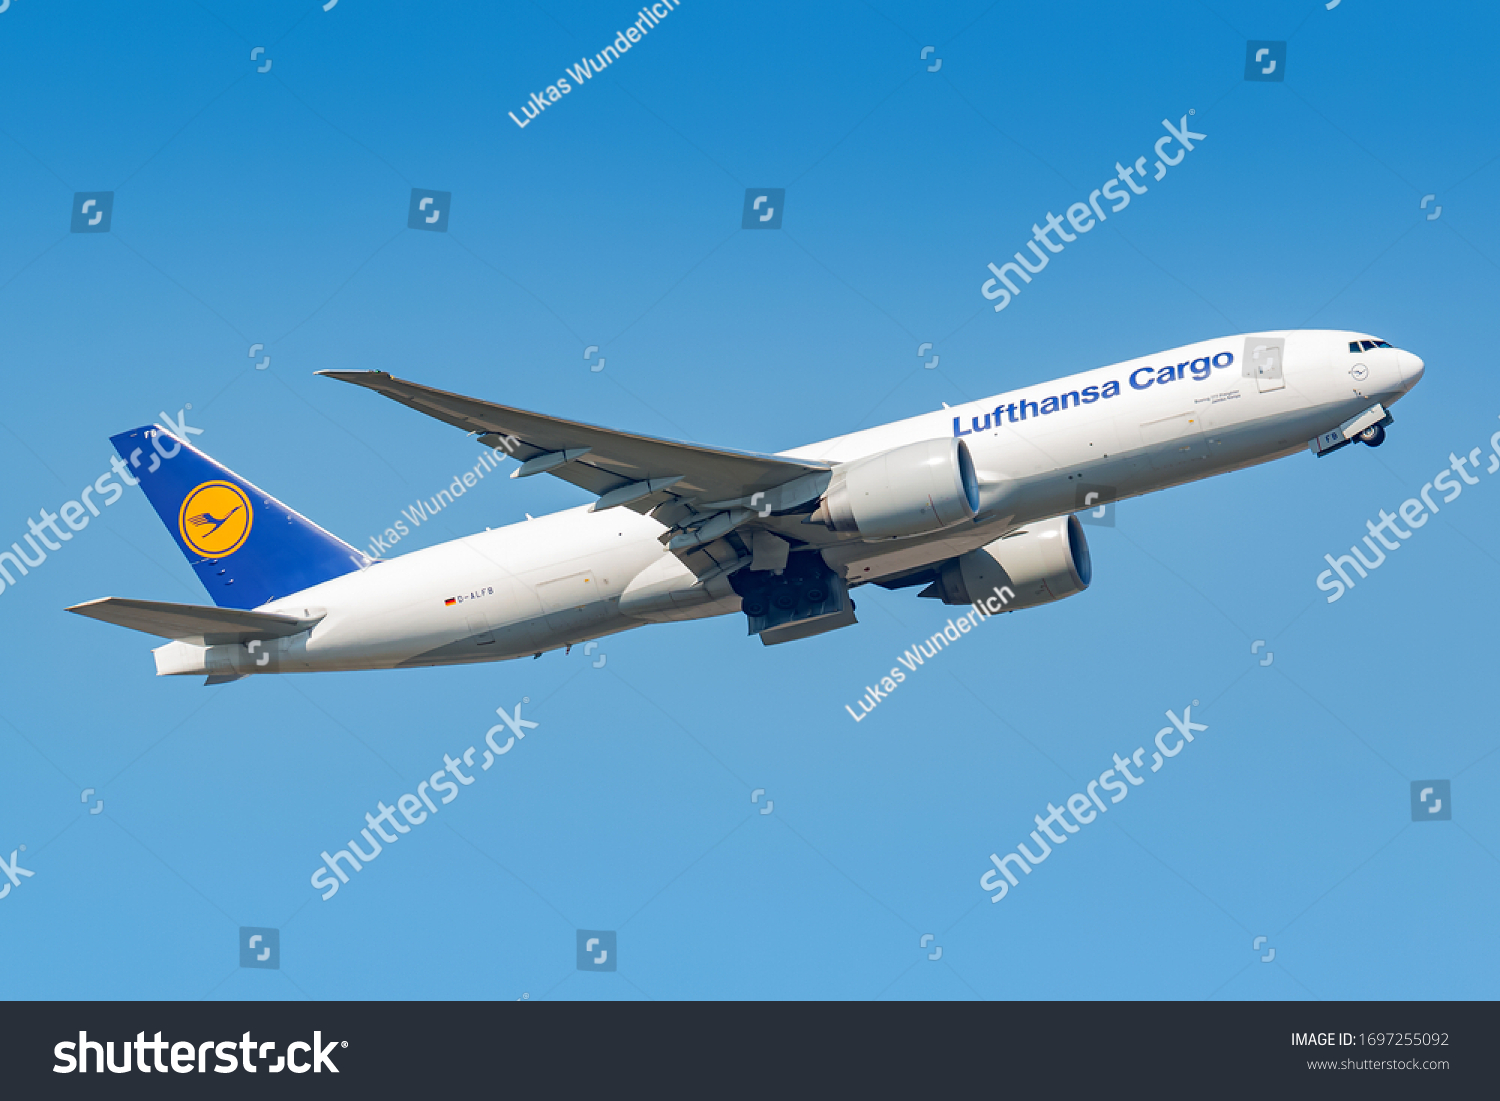 5,782 Lufthansa cargo Images, Stock Photos & Vectors | Shutterstock